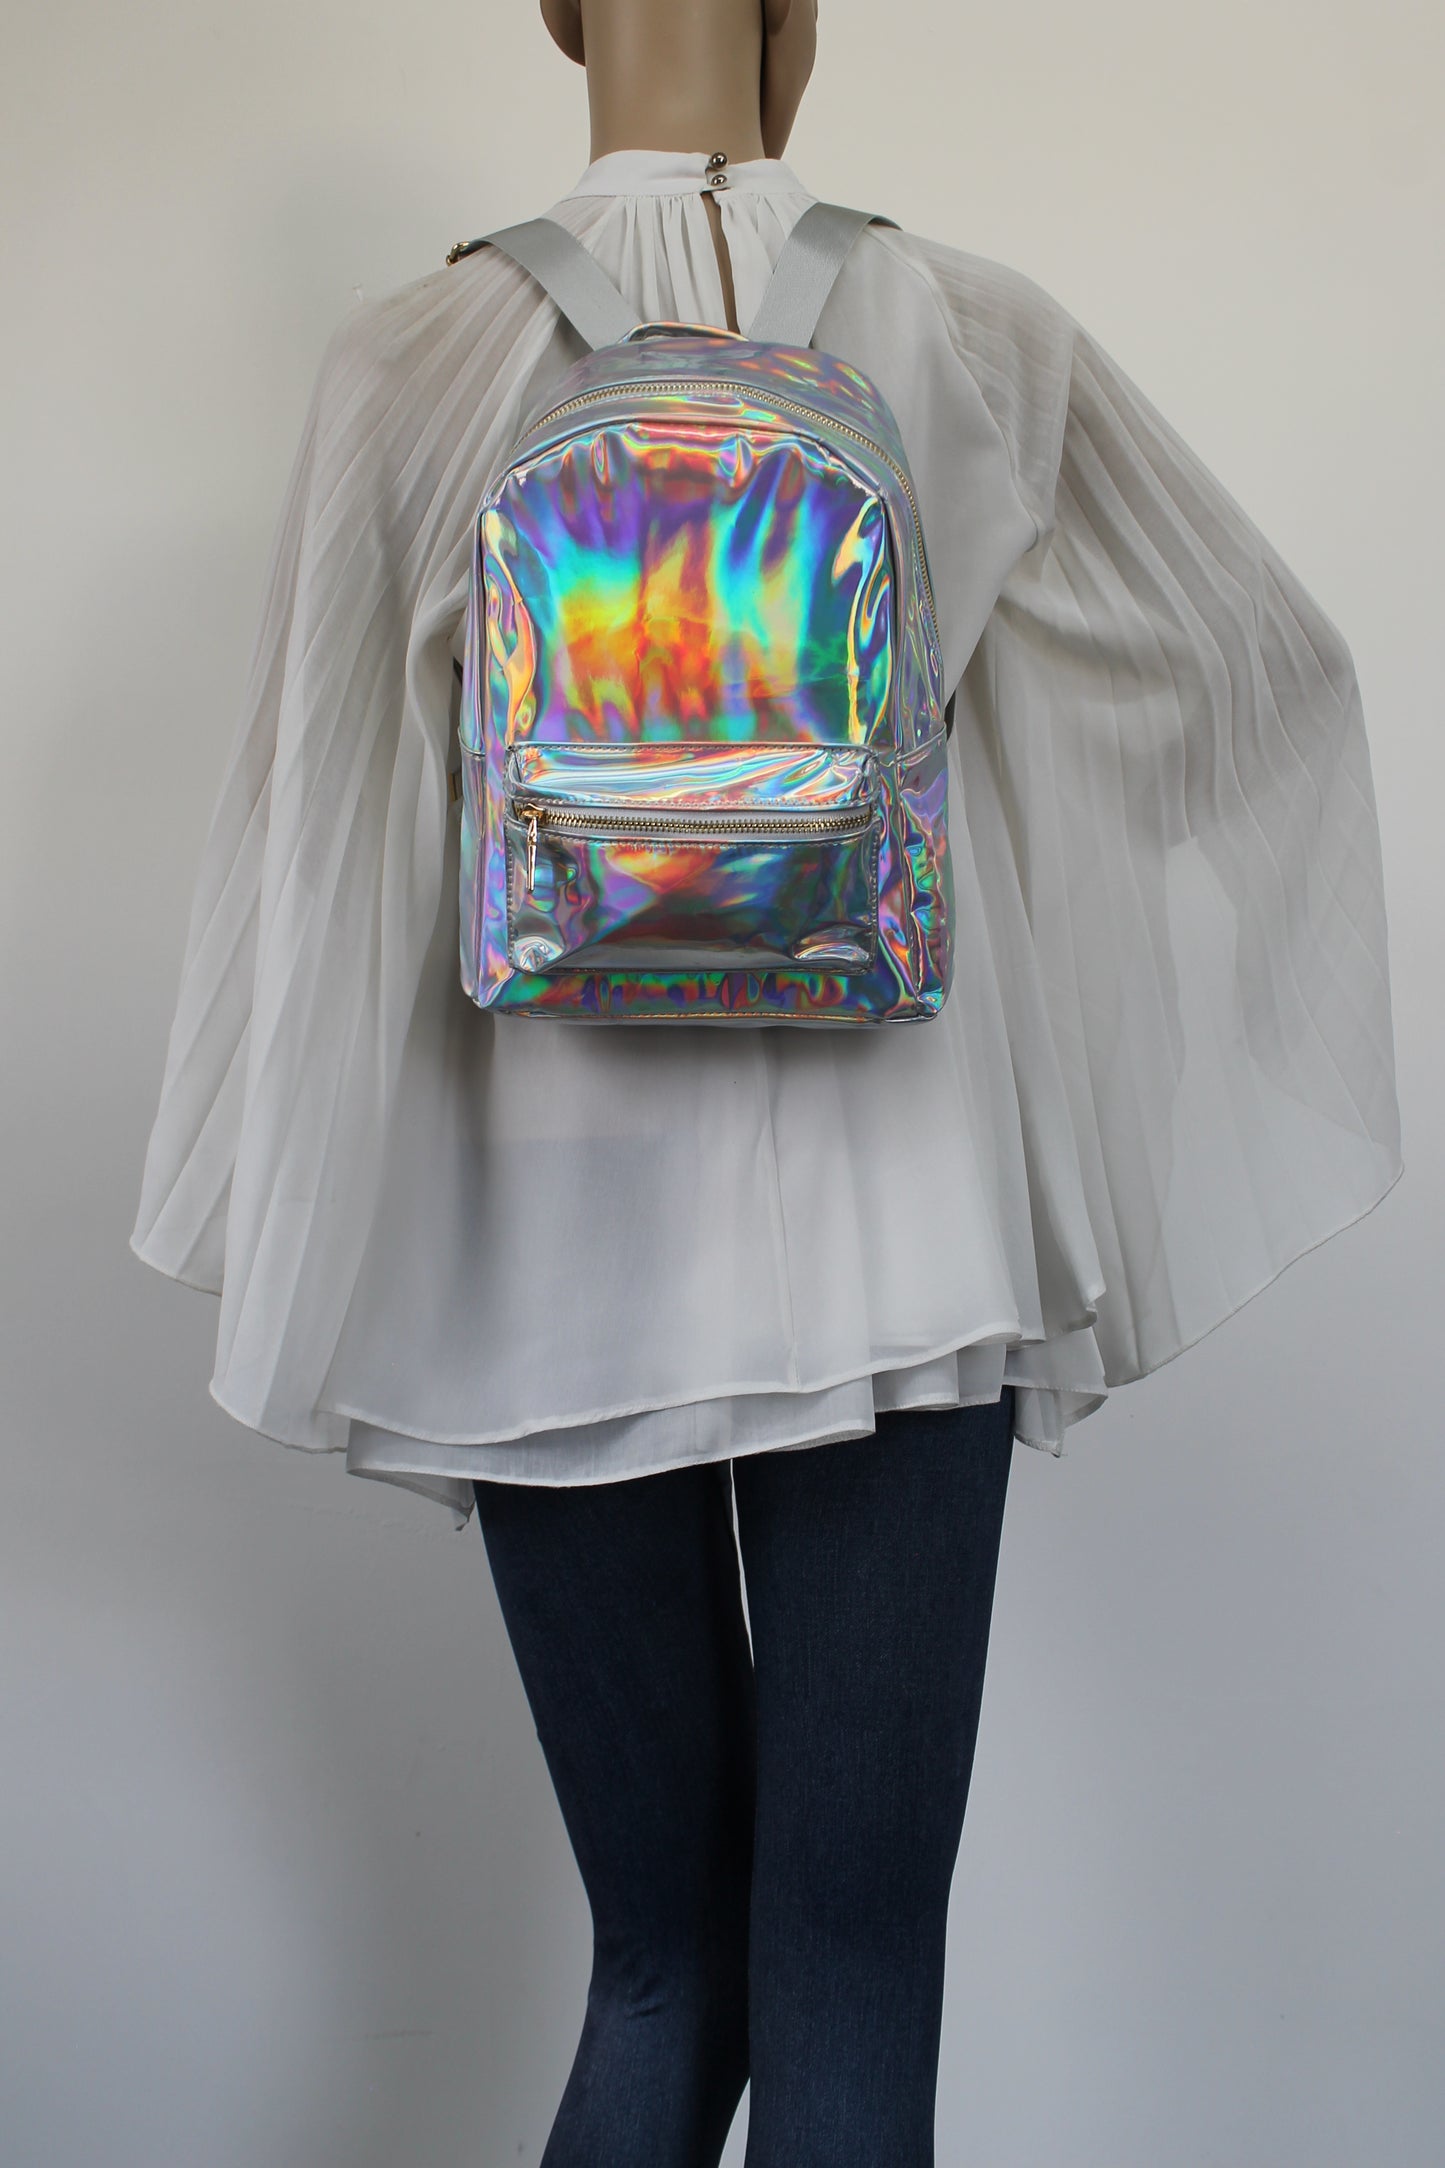 Swanky Swans Lara Backpack Hologram Perfect Backpack for school!